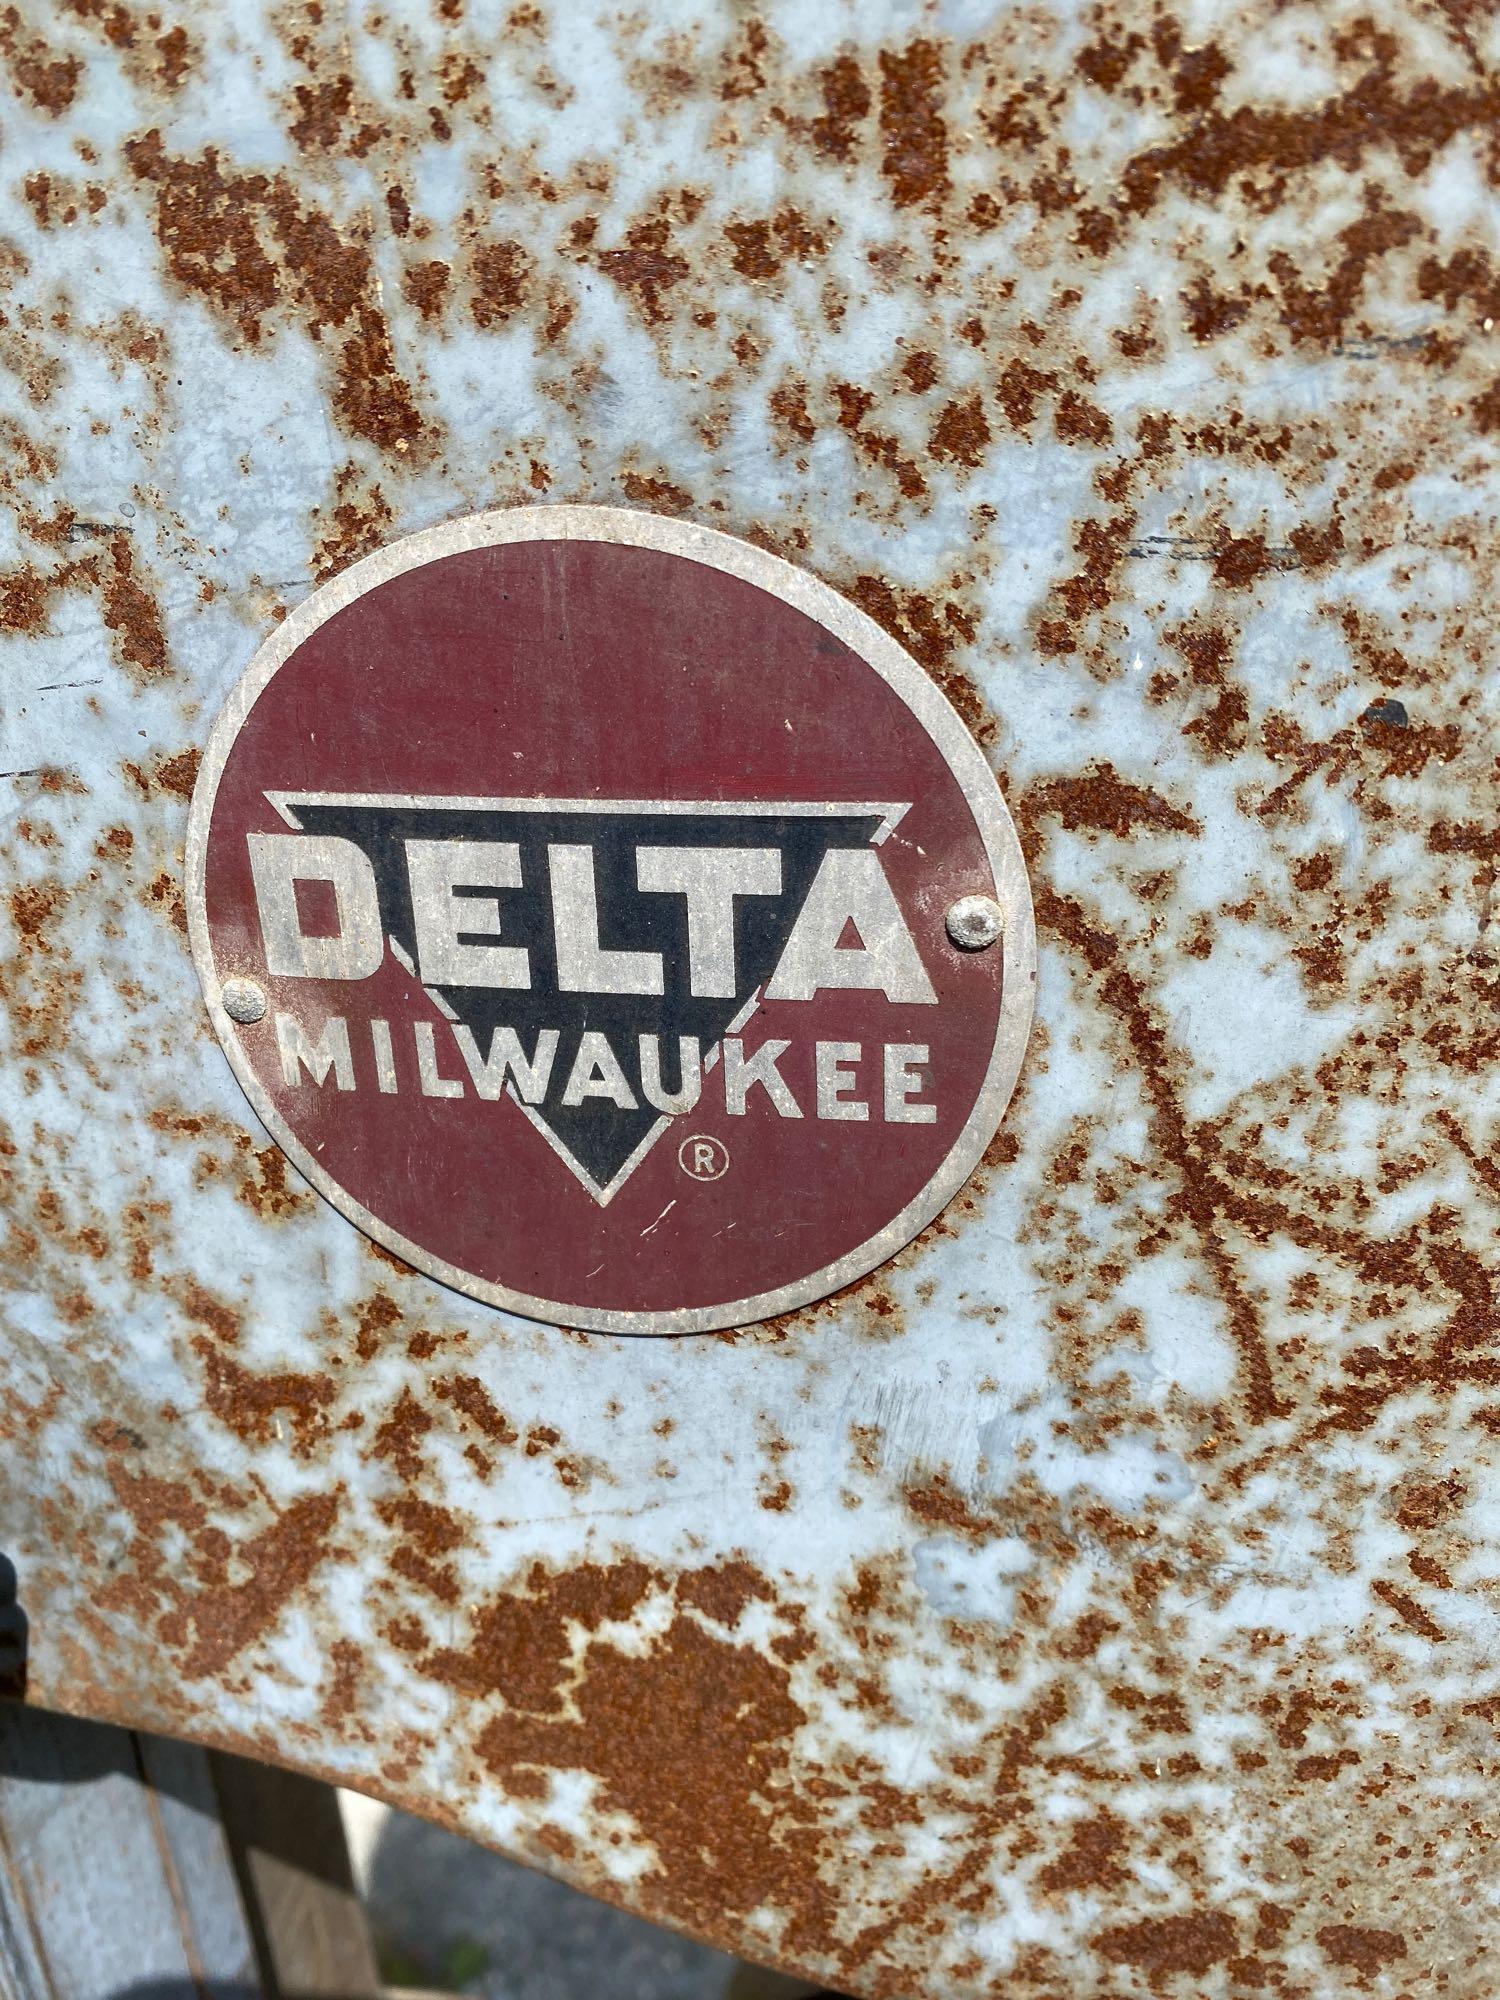 Delta Milwaukee Band Saw